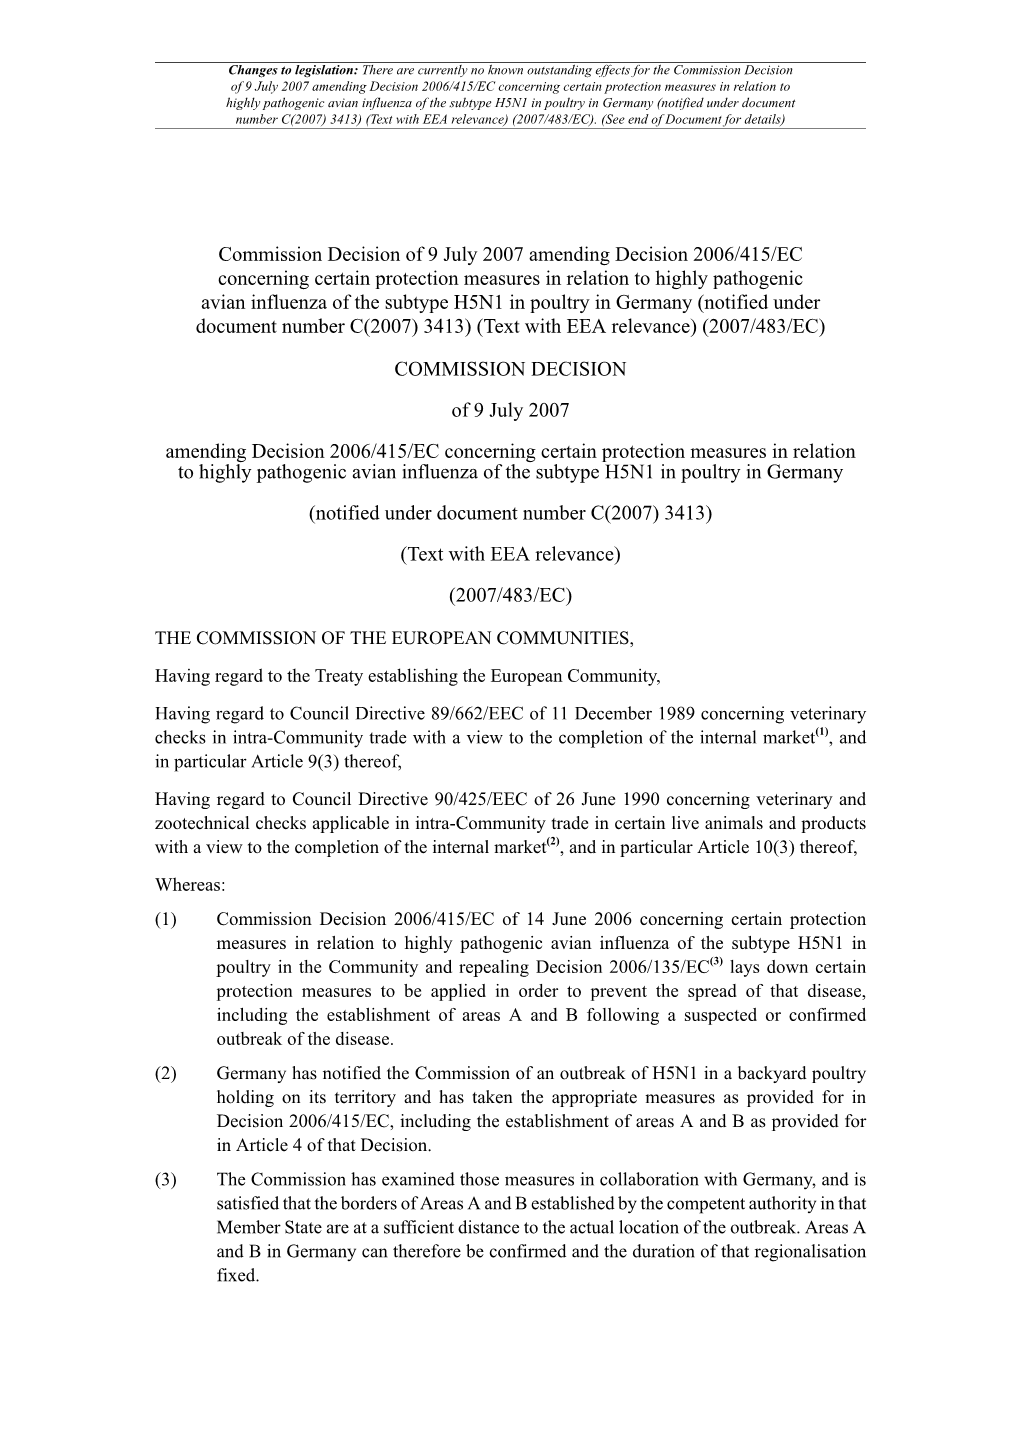 Commission Decision of 9 July 2007 Amending Decision 2006/415/EC